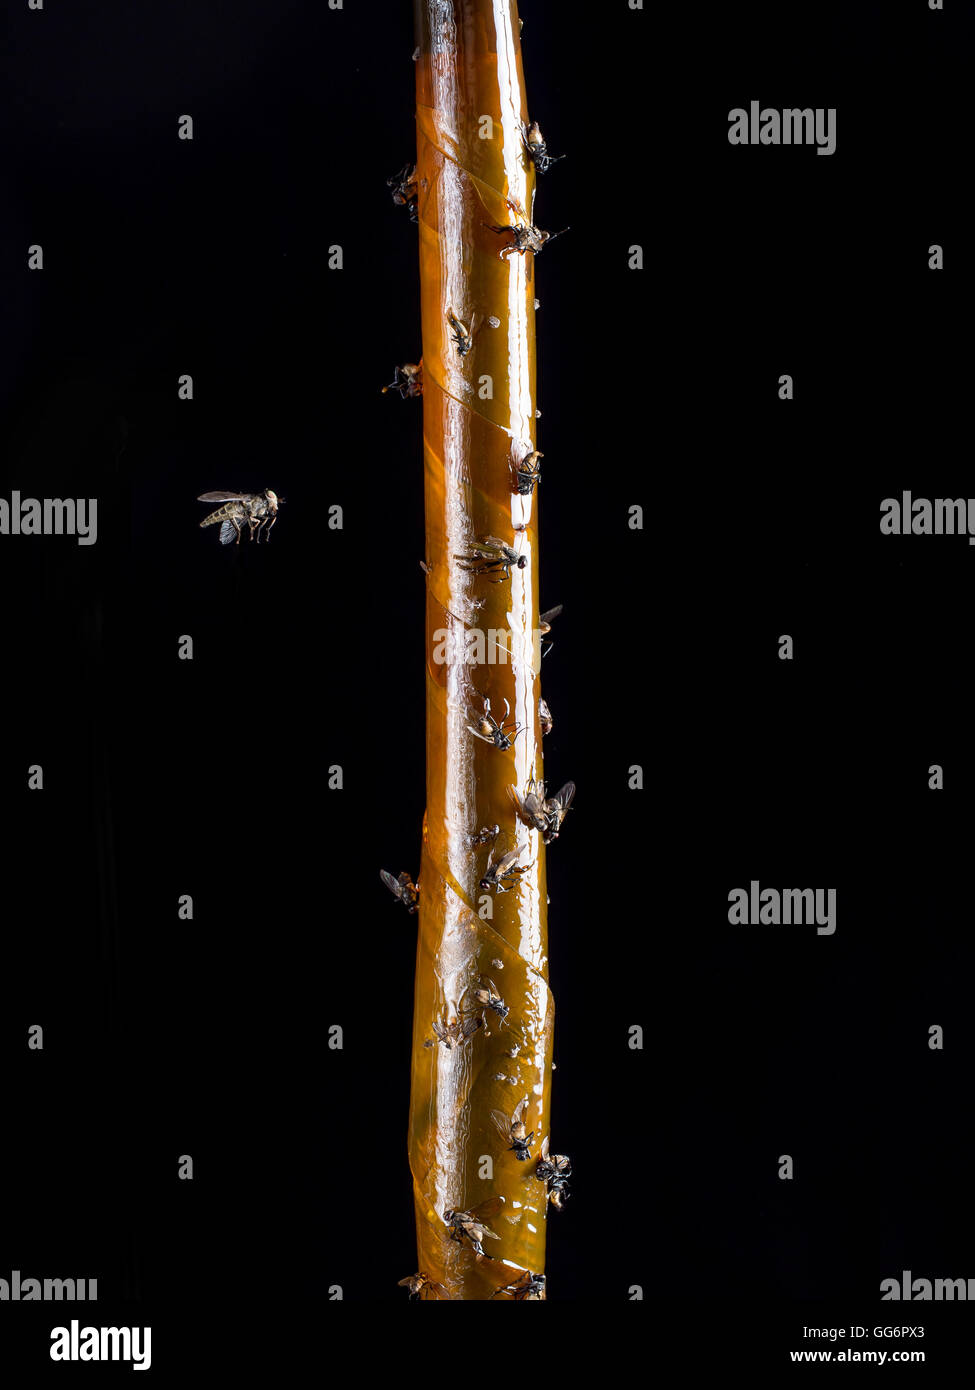 Fly avvicinando flypaper con mosche morte shot su sfondo nero Foto Stock